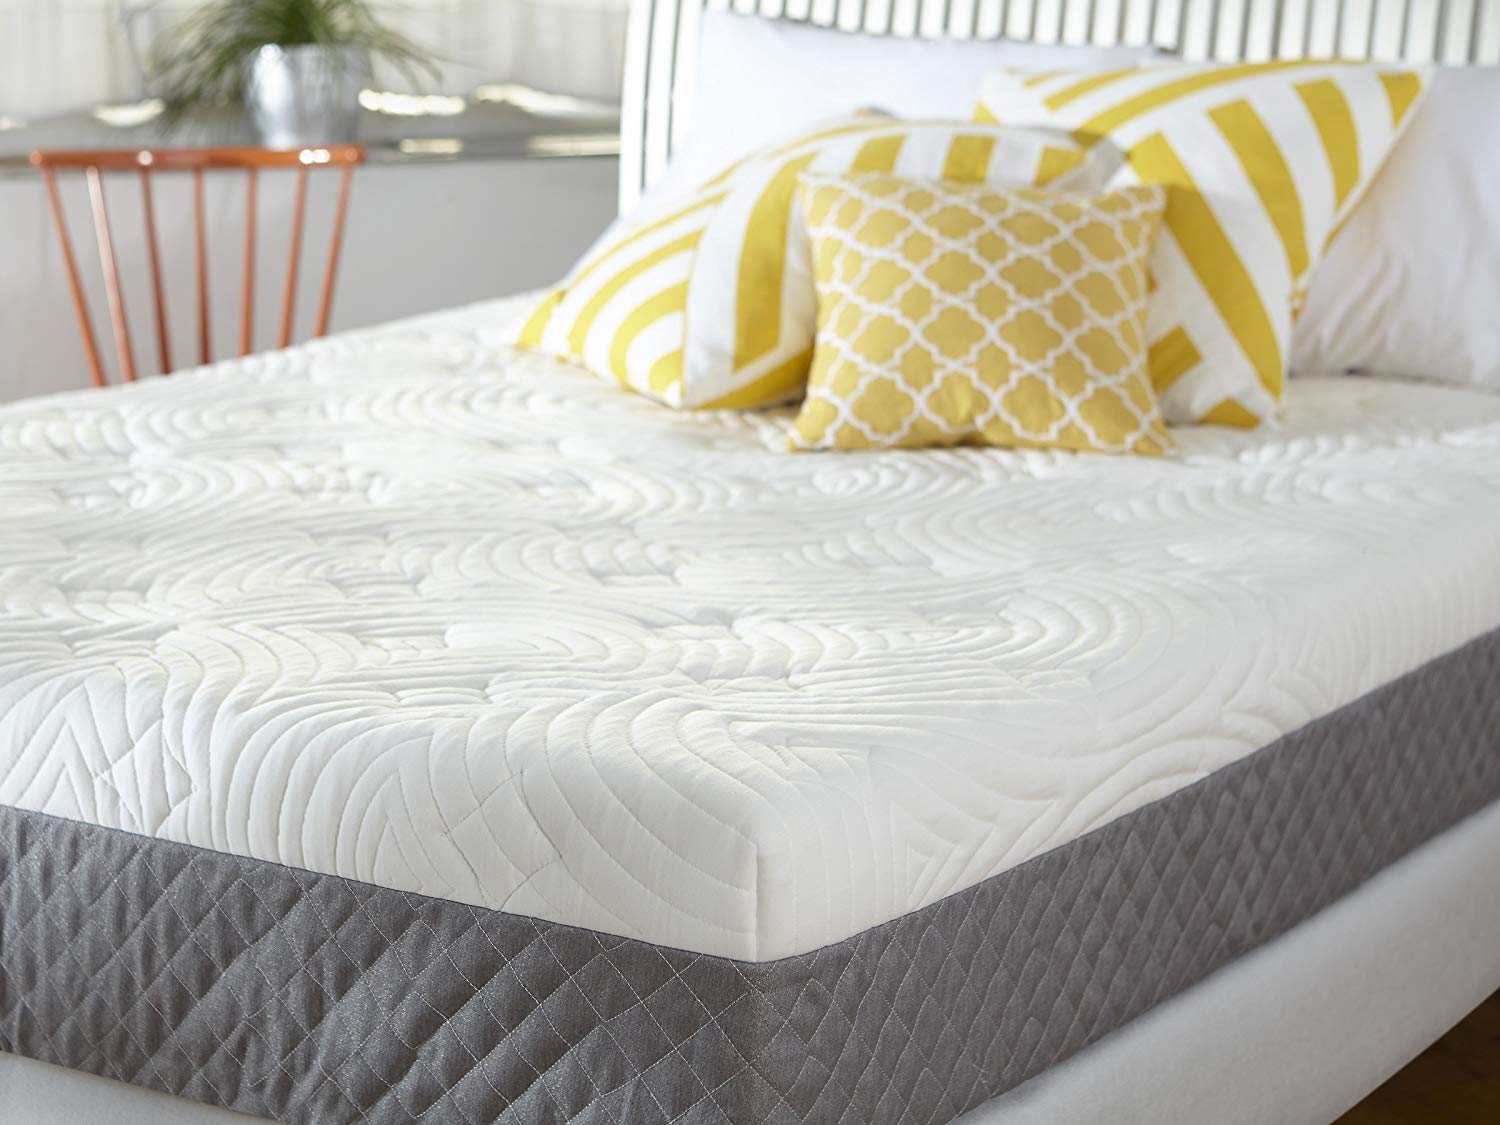 mattress latex or memory foam for side sleepers